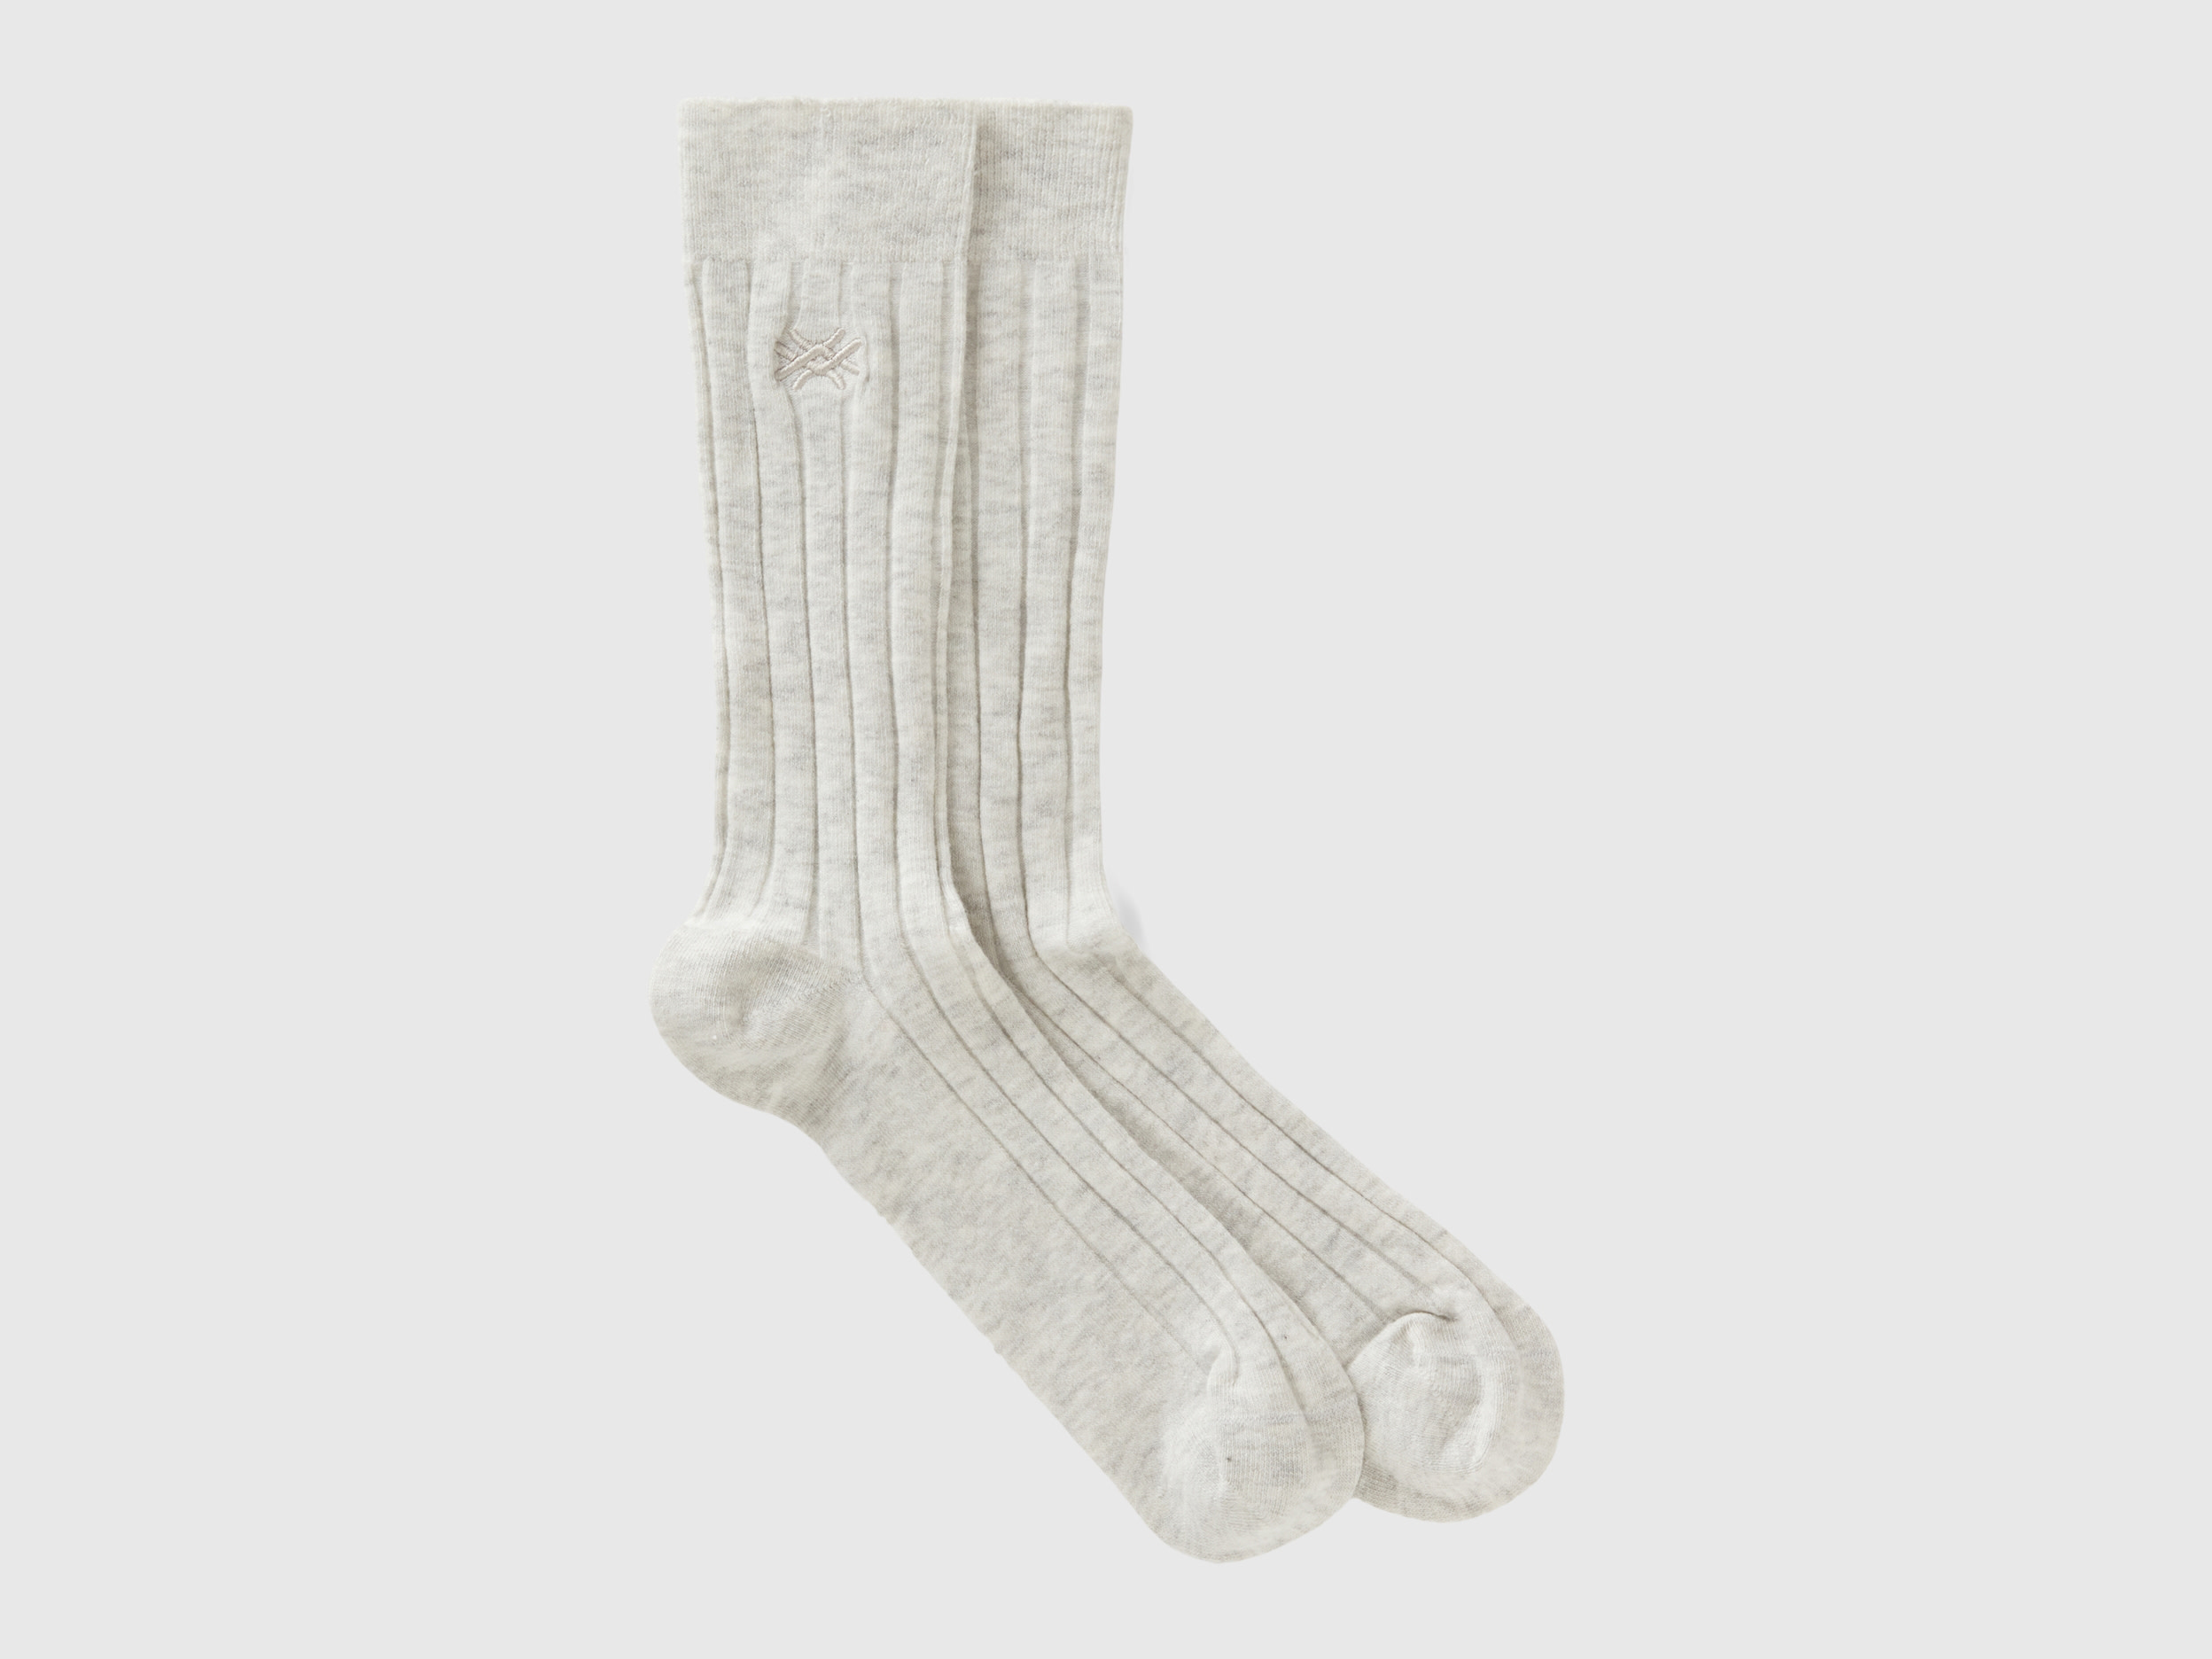 Benetton, Socks In Cashmere Blend, size 8-11, Creamy White, Women